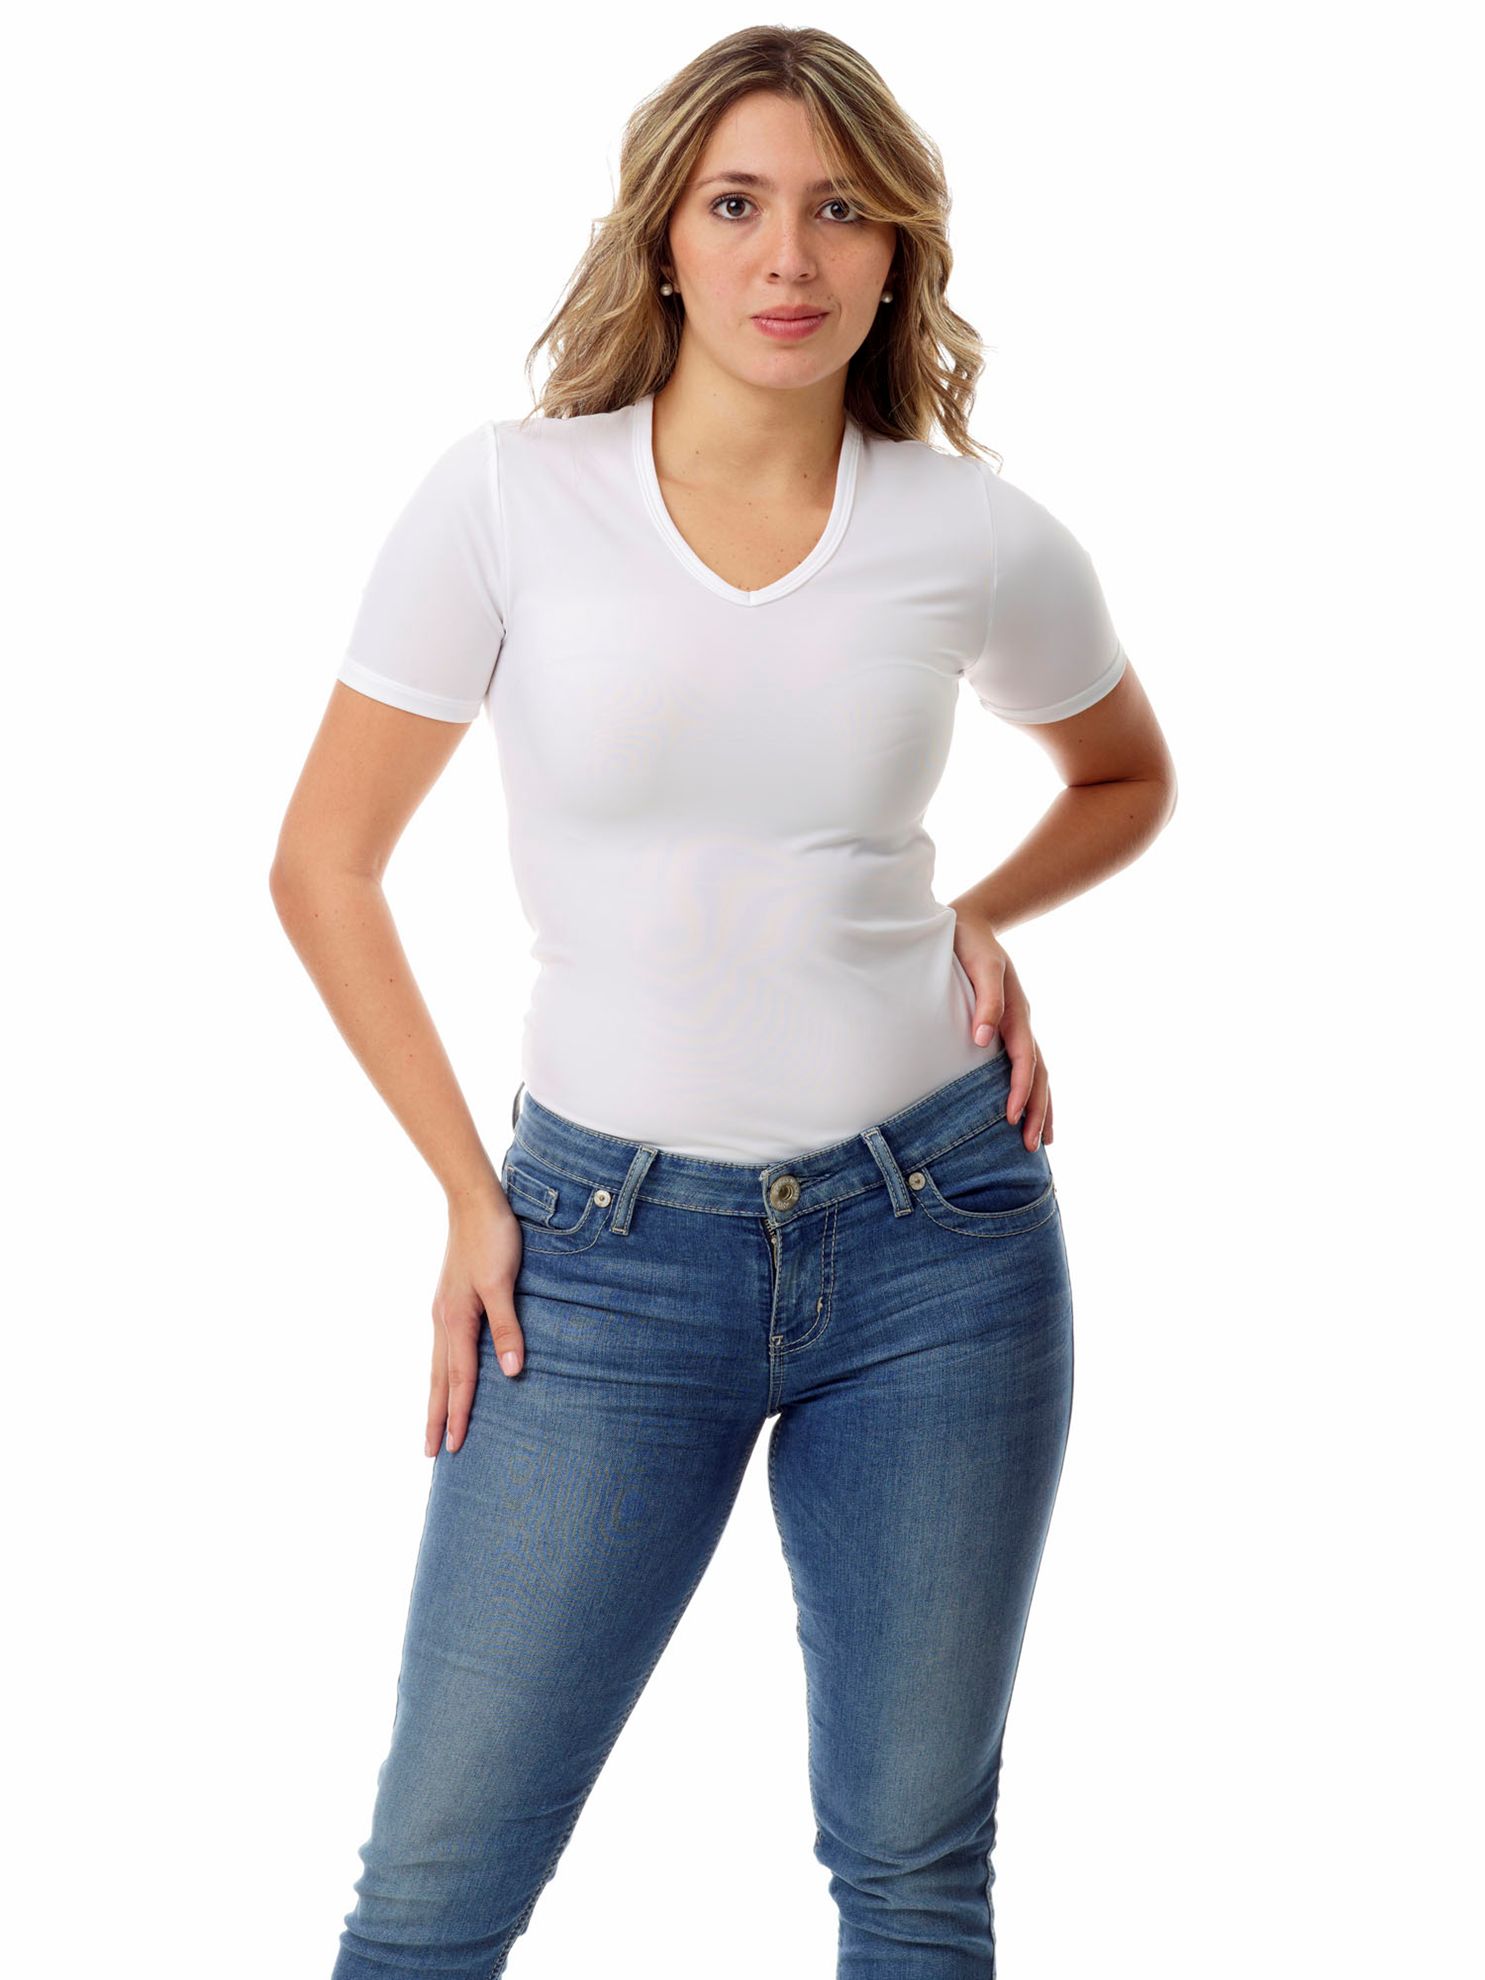 Underworks Womens Microfiber V-Neck T-shirt - White - XS